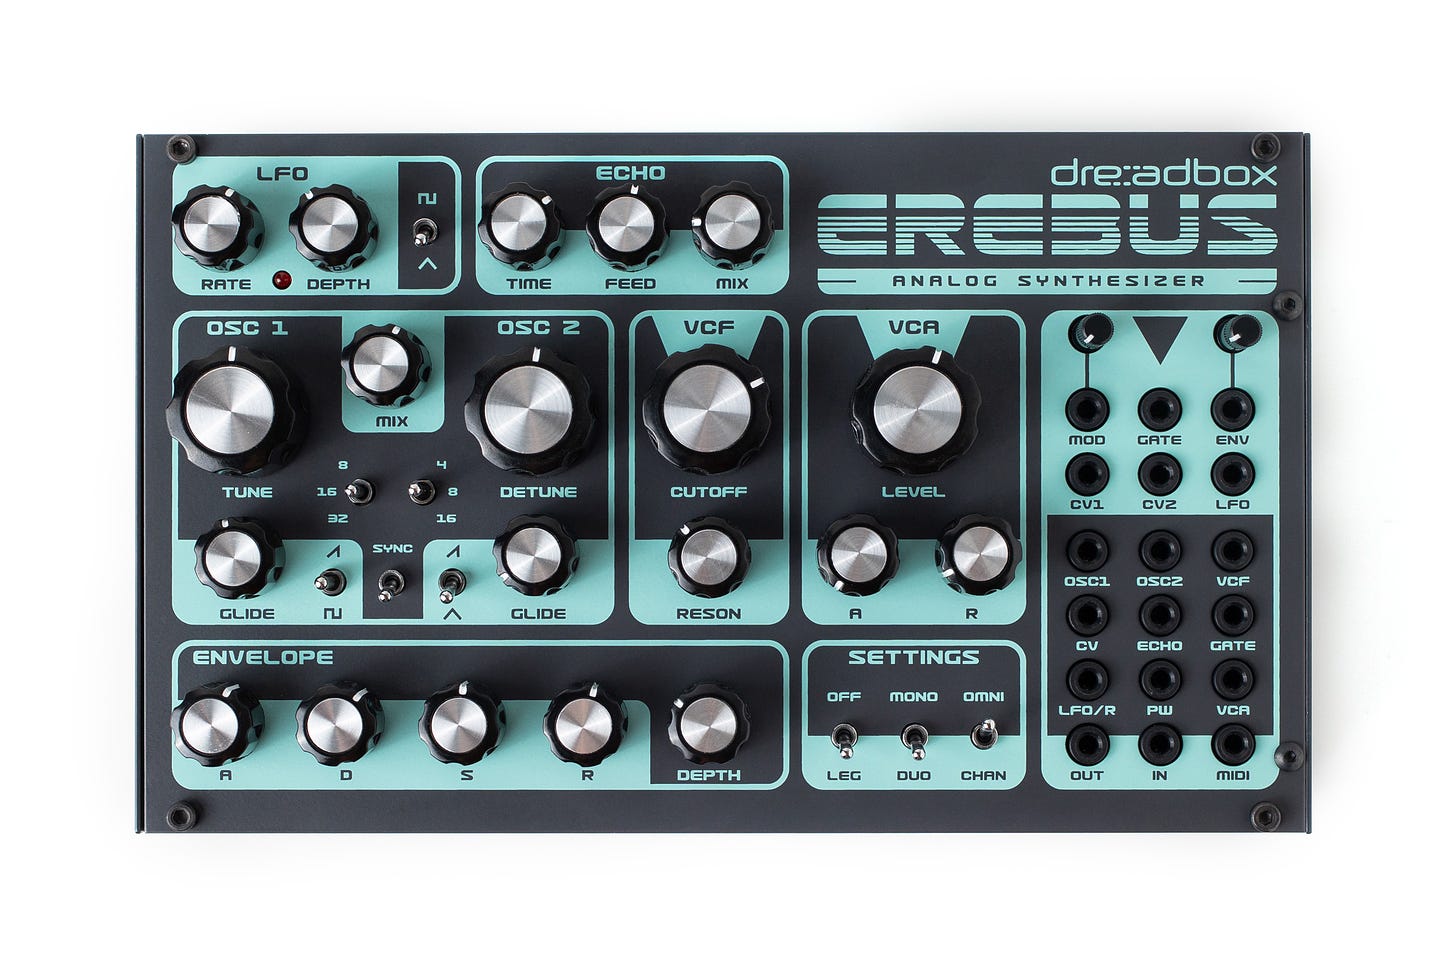 The Dreadbox Erebus synthesizer (Credit: www.dreadbox-fx.com)